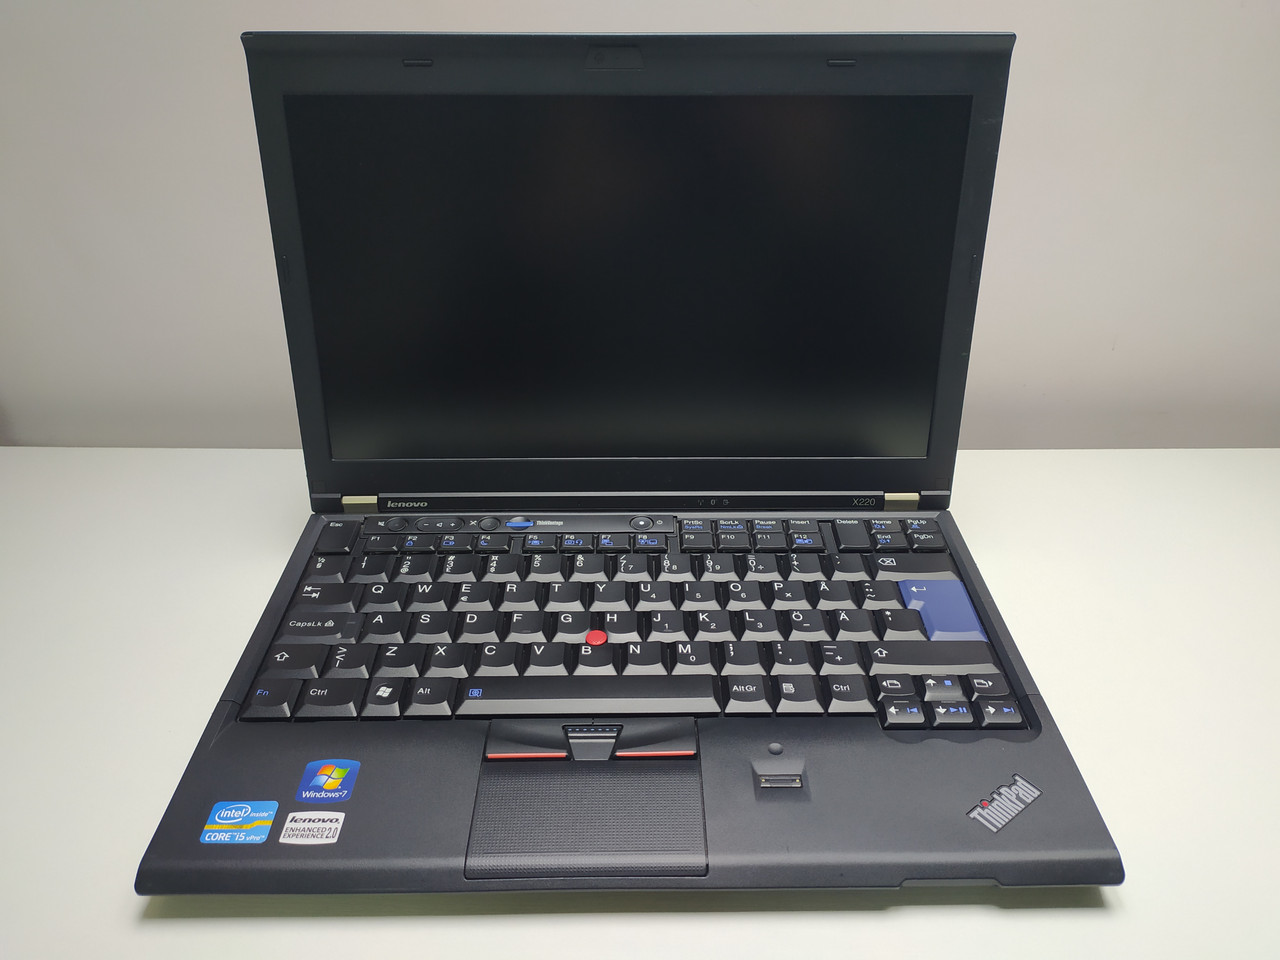 Ноутбук Lenovo ThinkPad X220 Intel Core i5-2520M 3.2 GHz/4Гб/12.5"/3G модем/GPS/HD Graphics 3000